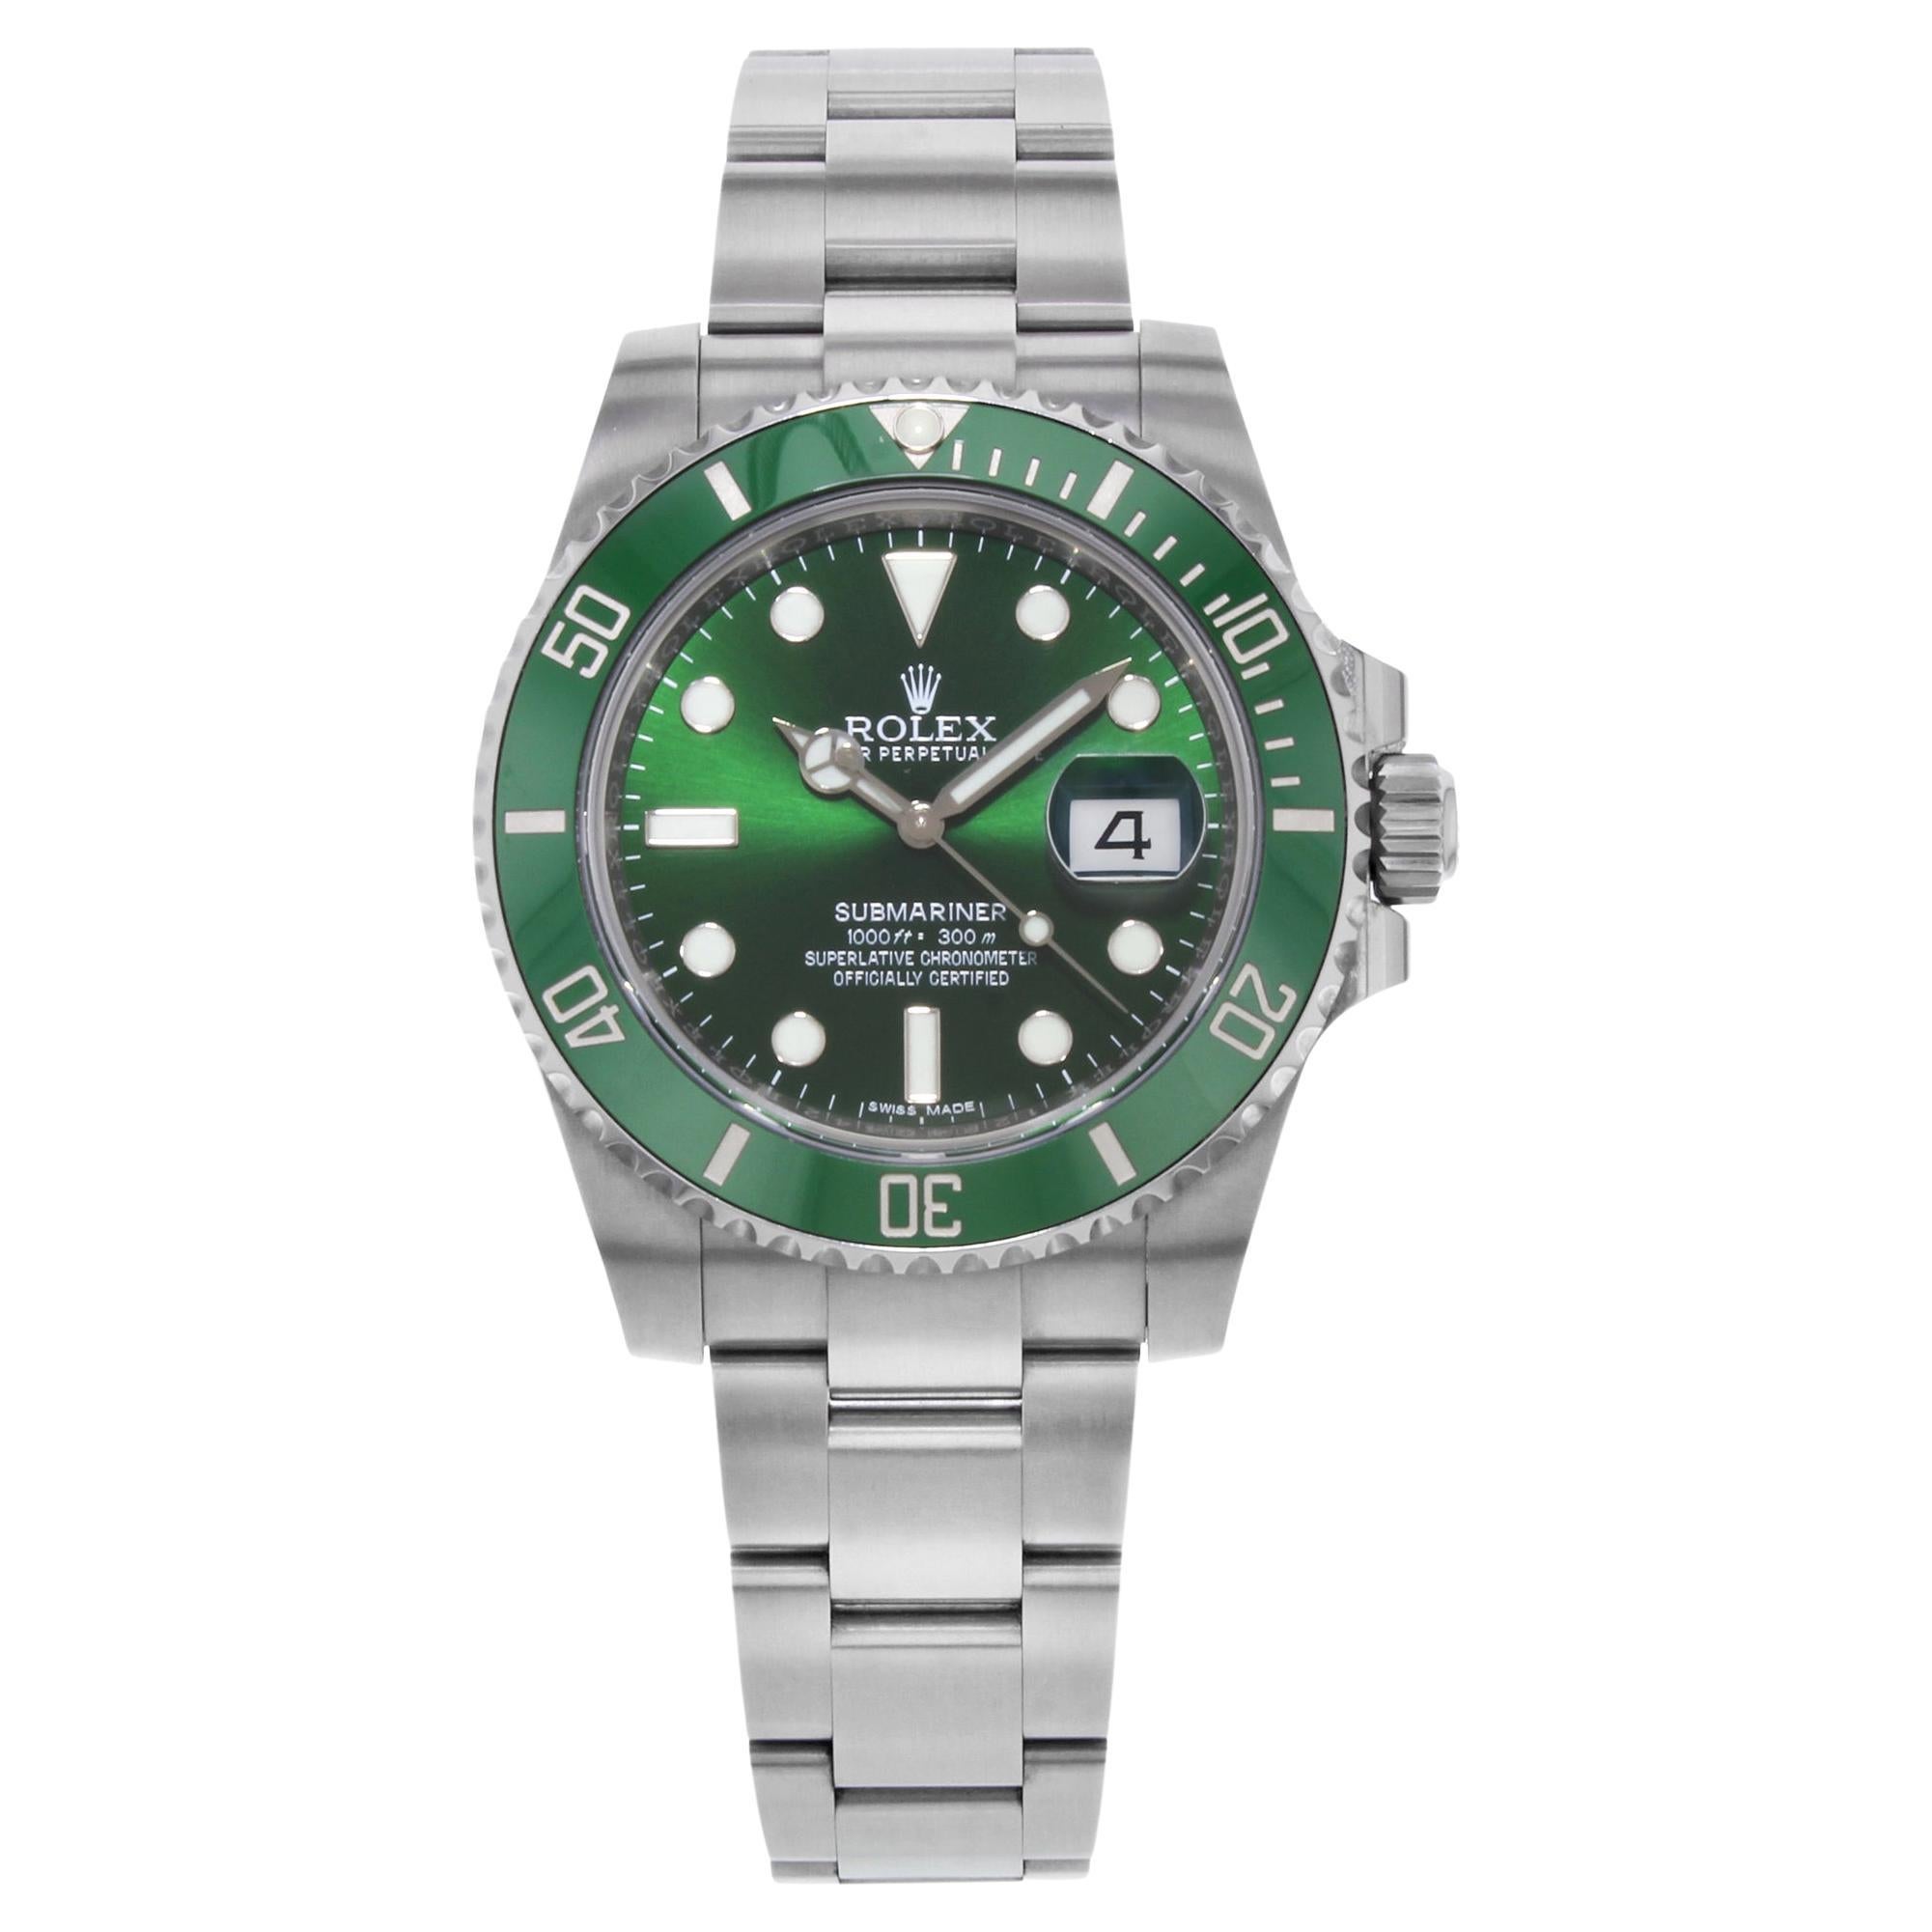 Rolex Submariner Green Steel Ceramic Automatic Watch 116610LV For Sale at | hulk rolex for sale, rolex hulk, rolex for sale